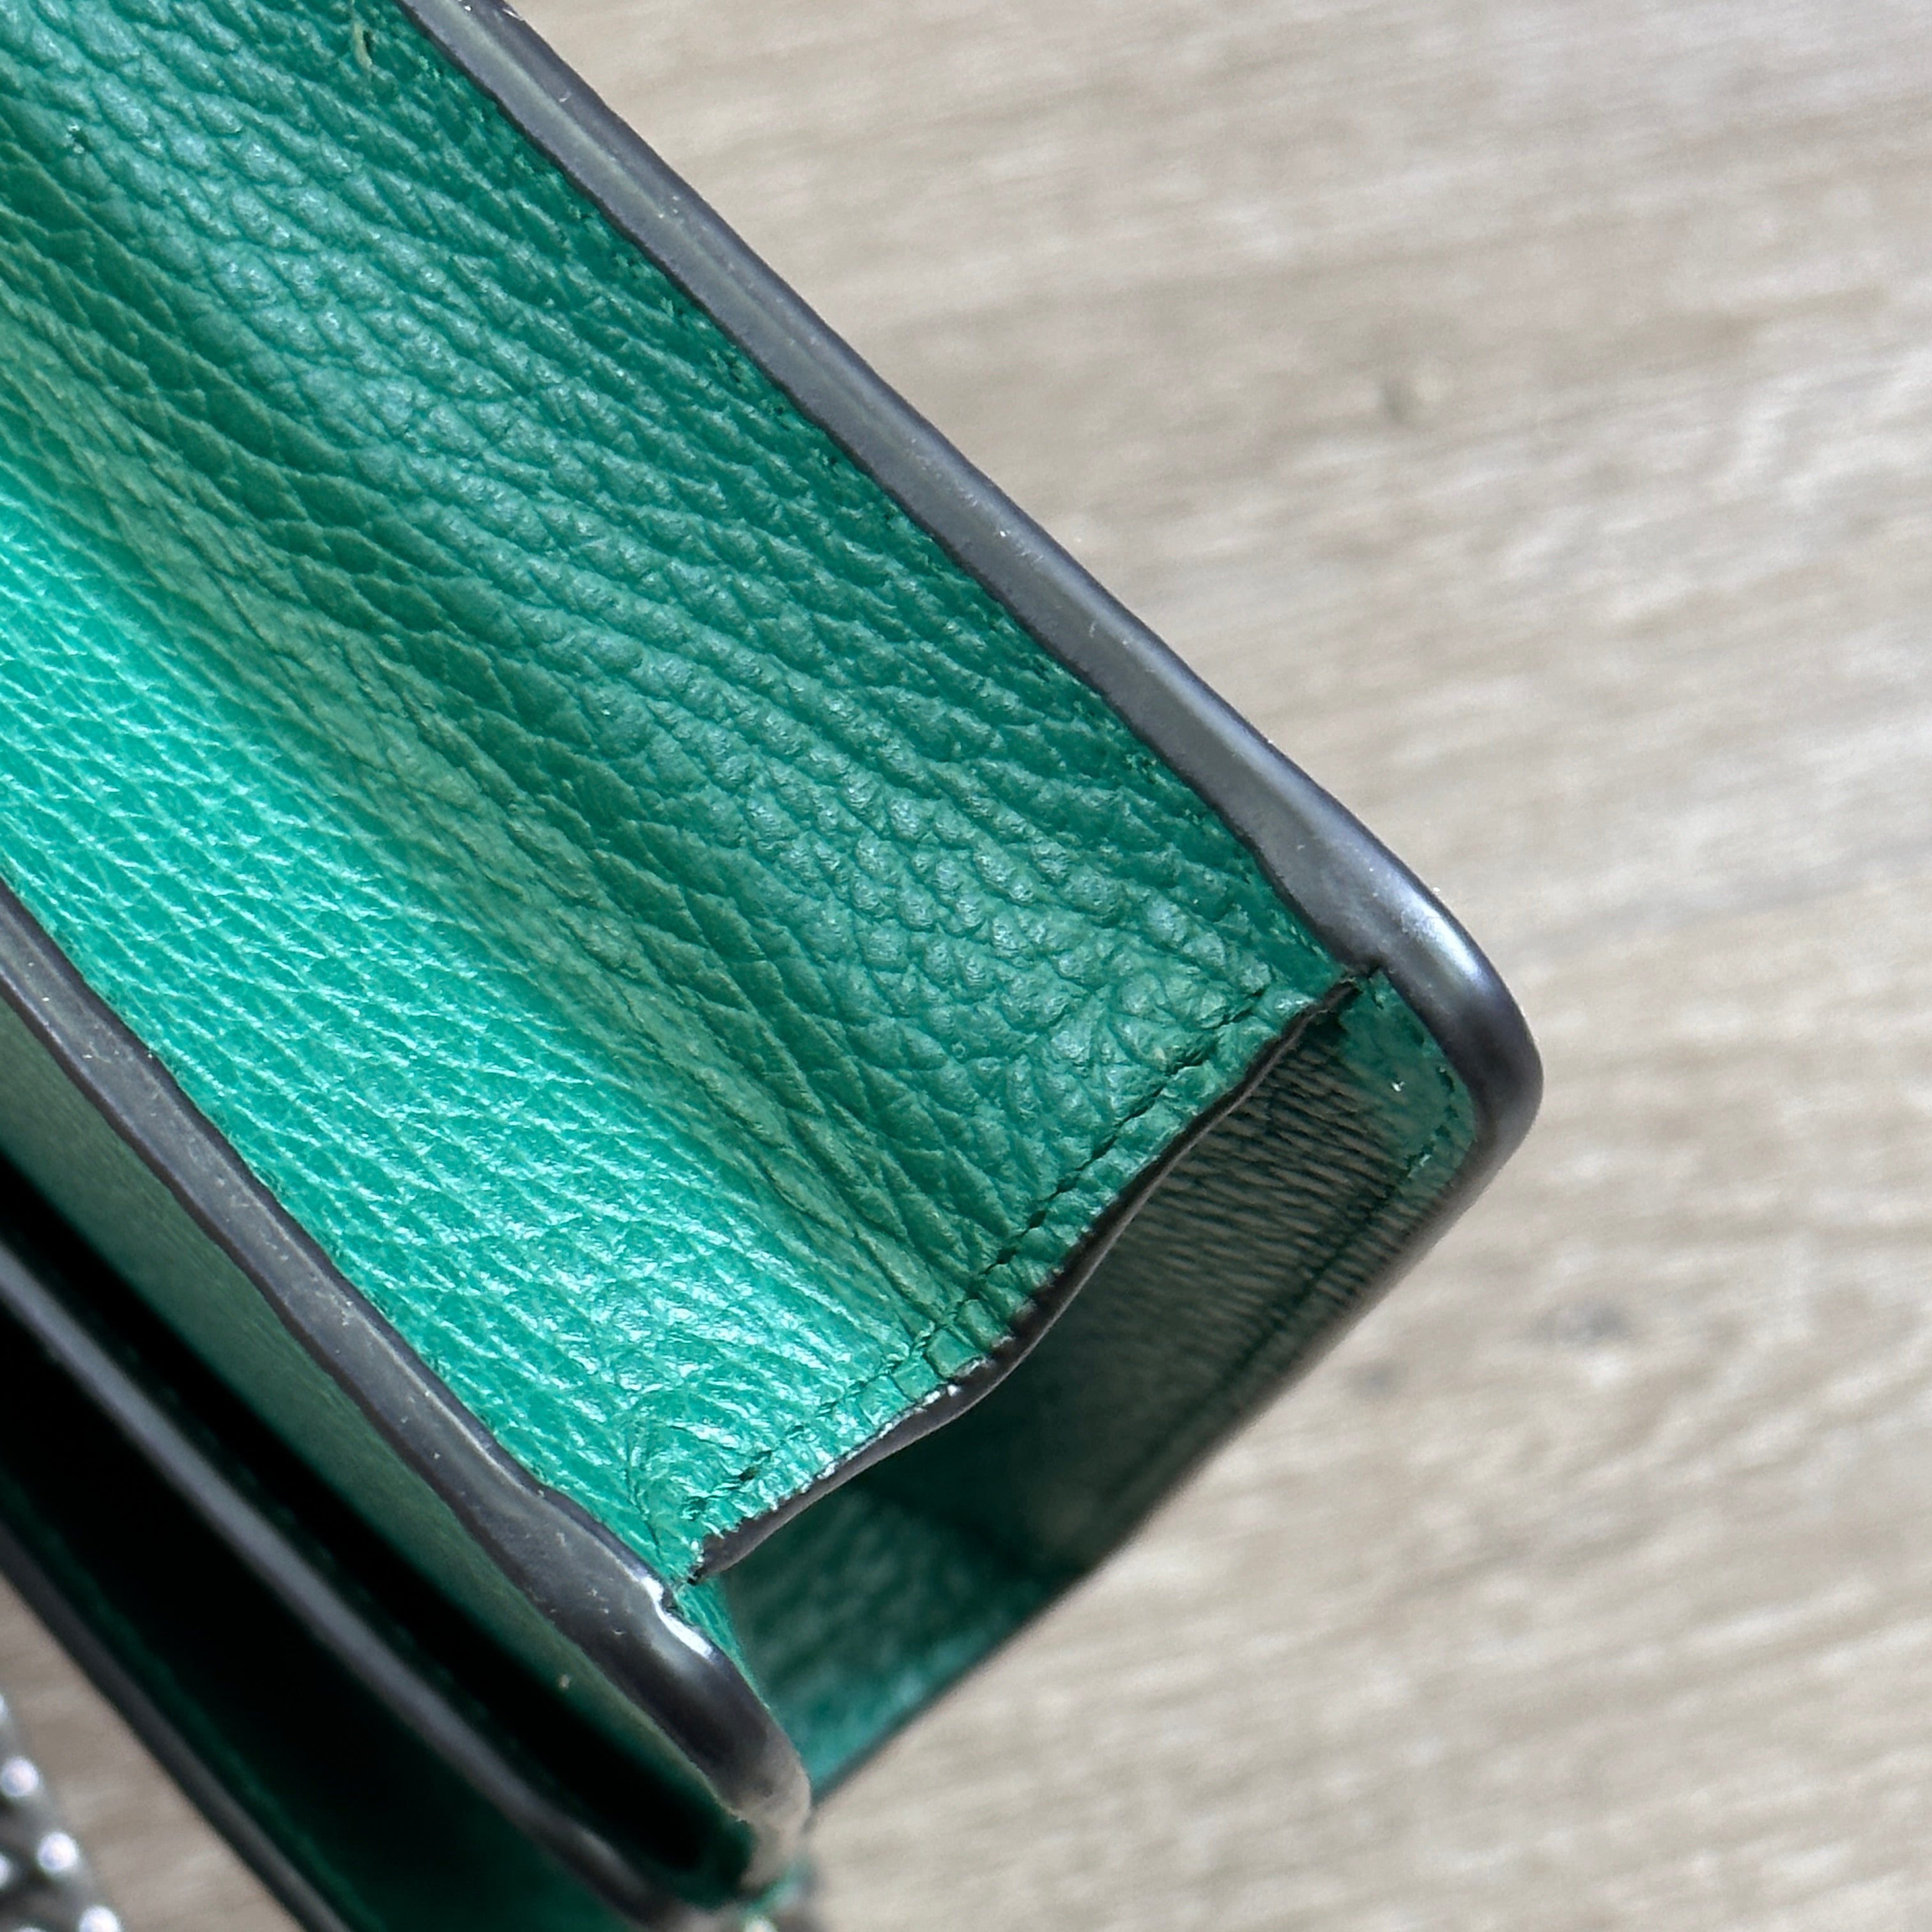 Gucci Emerald Green Leather Dionysus Bag